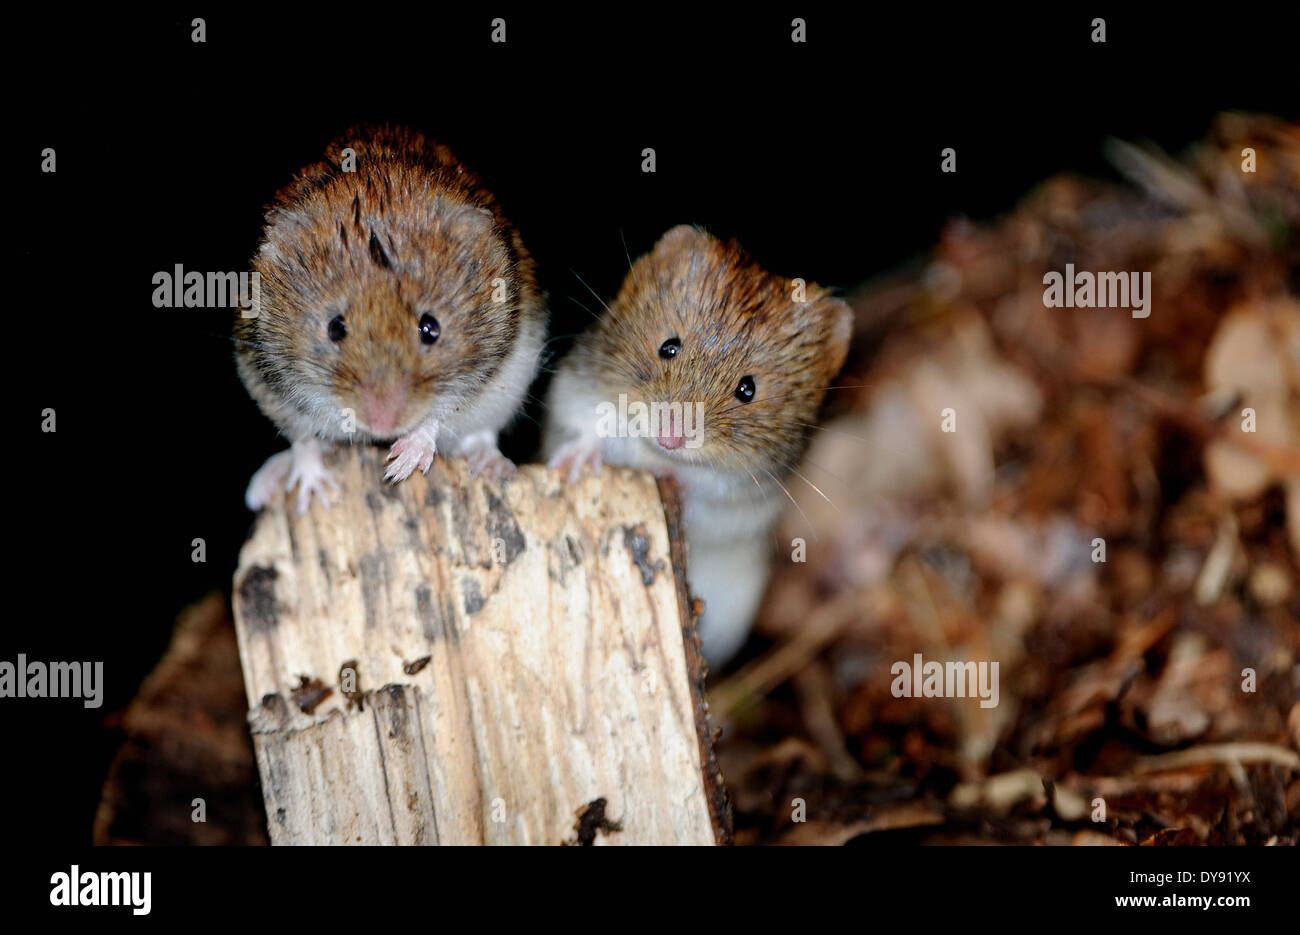 bank vole wintry forest ground Myodes glareolus mouse mammals vertebrates mice field mice voles muroids cricetids bank voles, Stock Photo